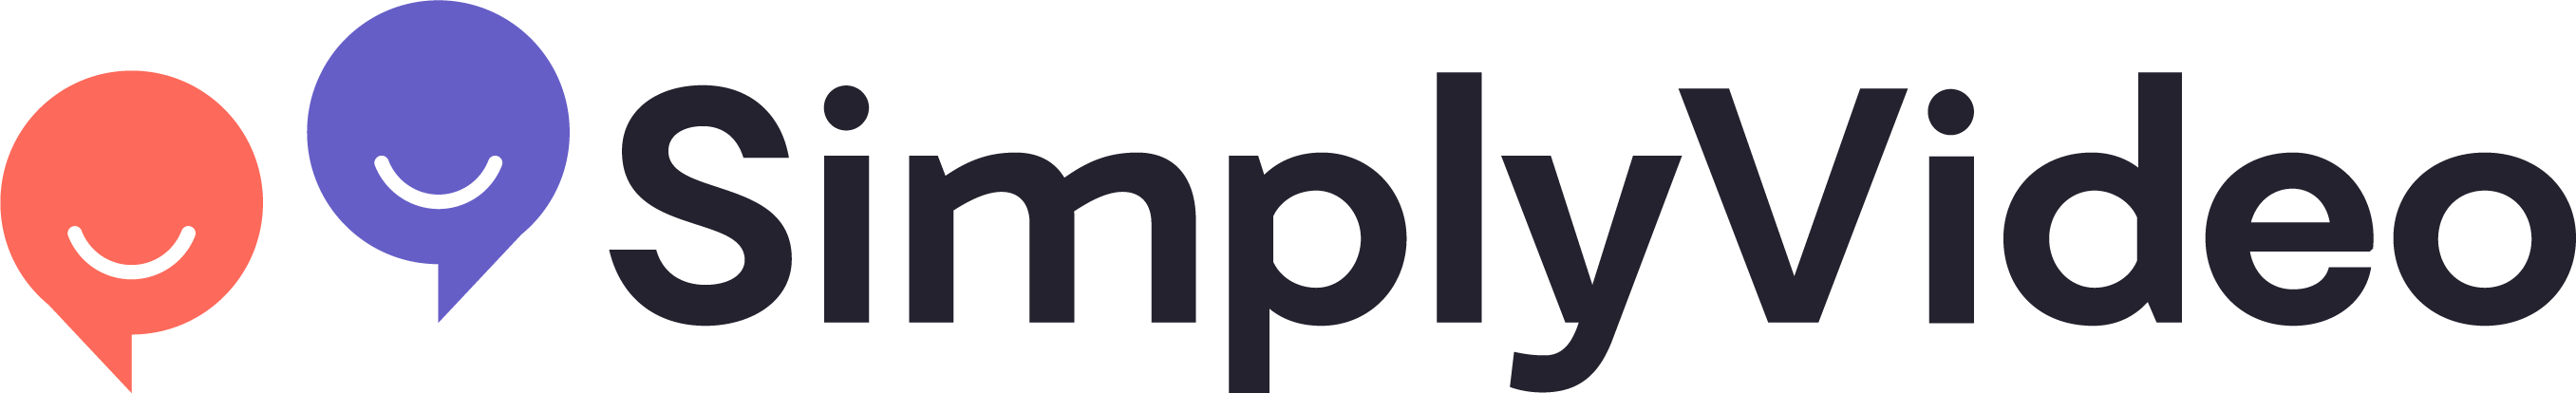 Simplyvideo_logo